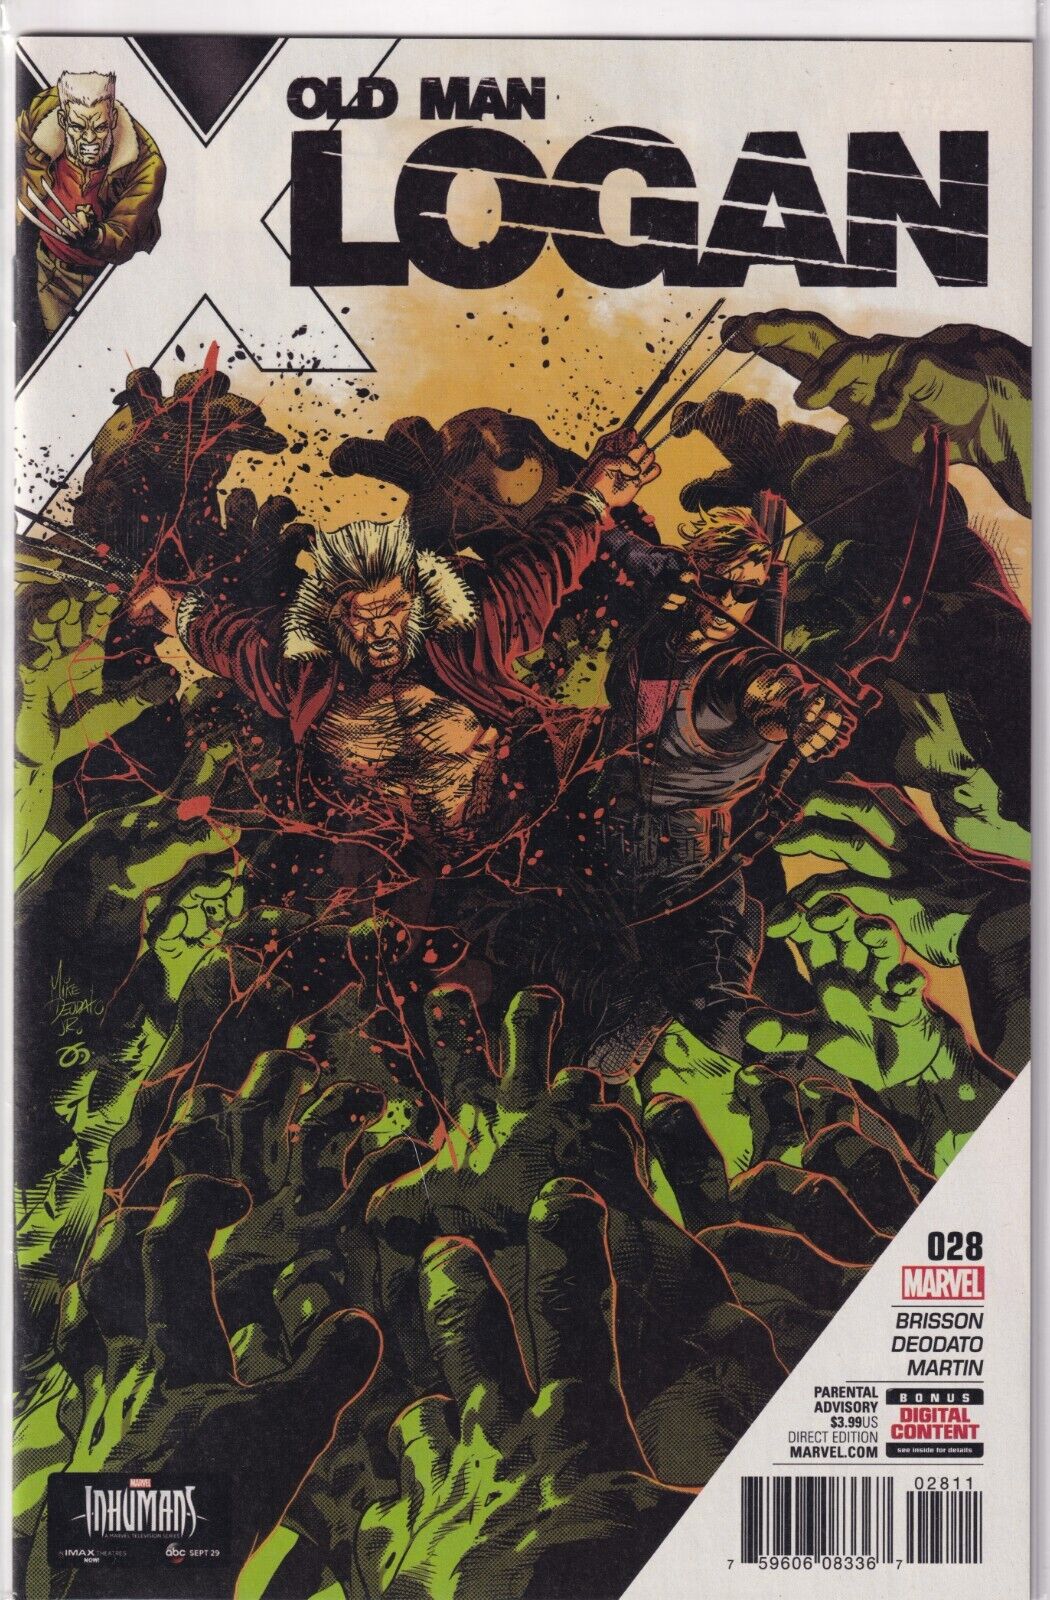 Old Man Logan #28 Cover 1A (Marvel Comics MCU) NM (B&B)